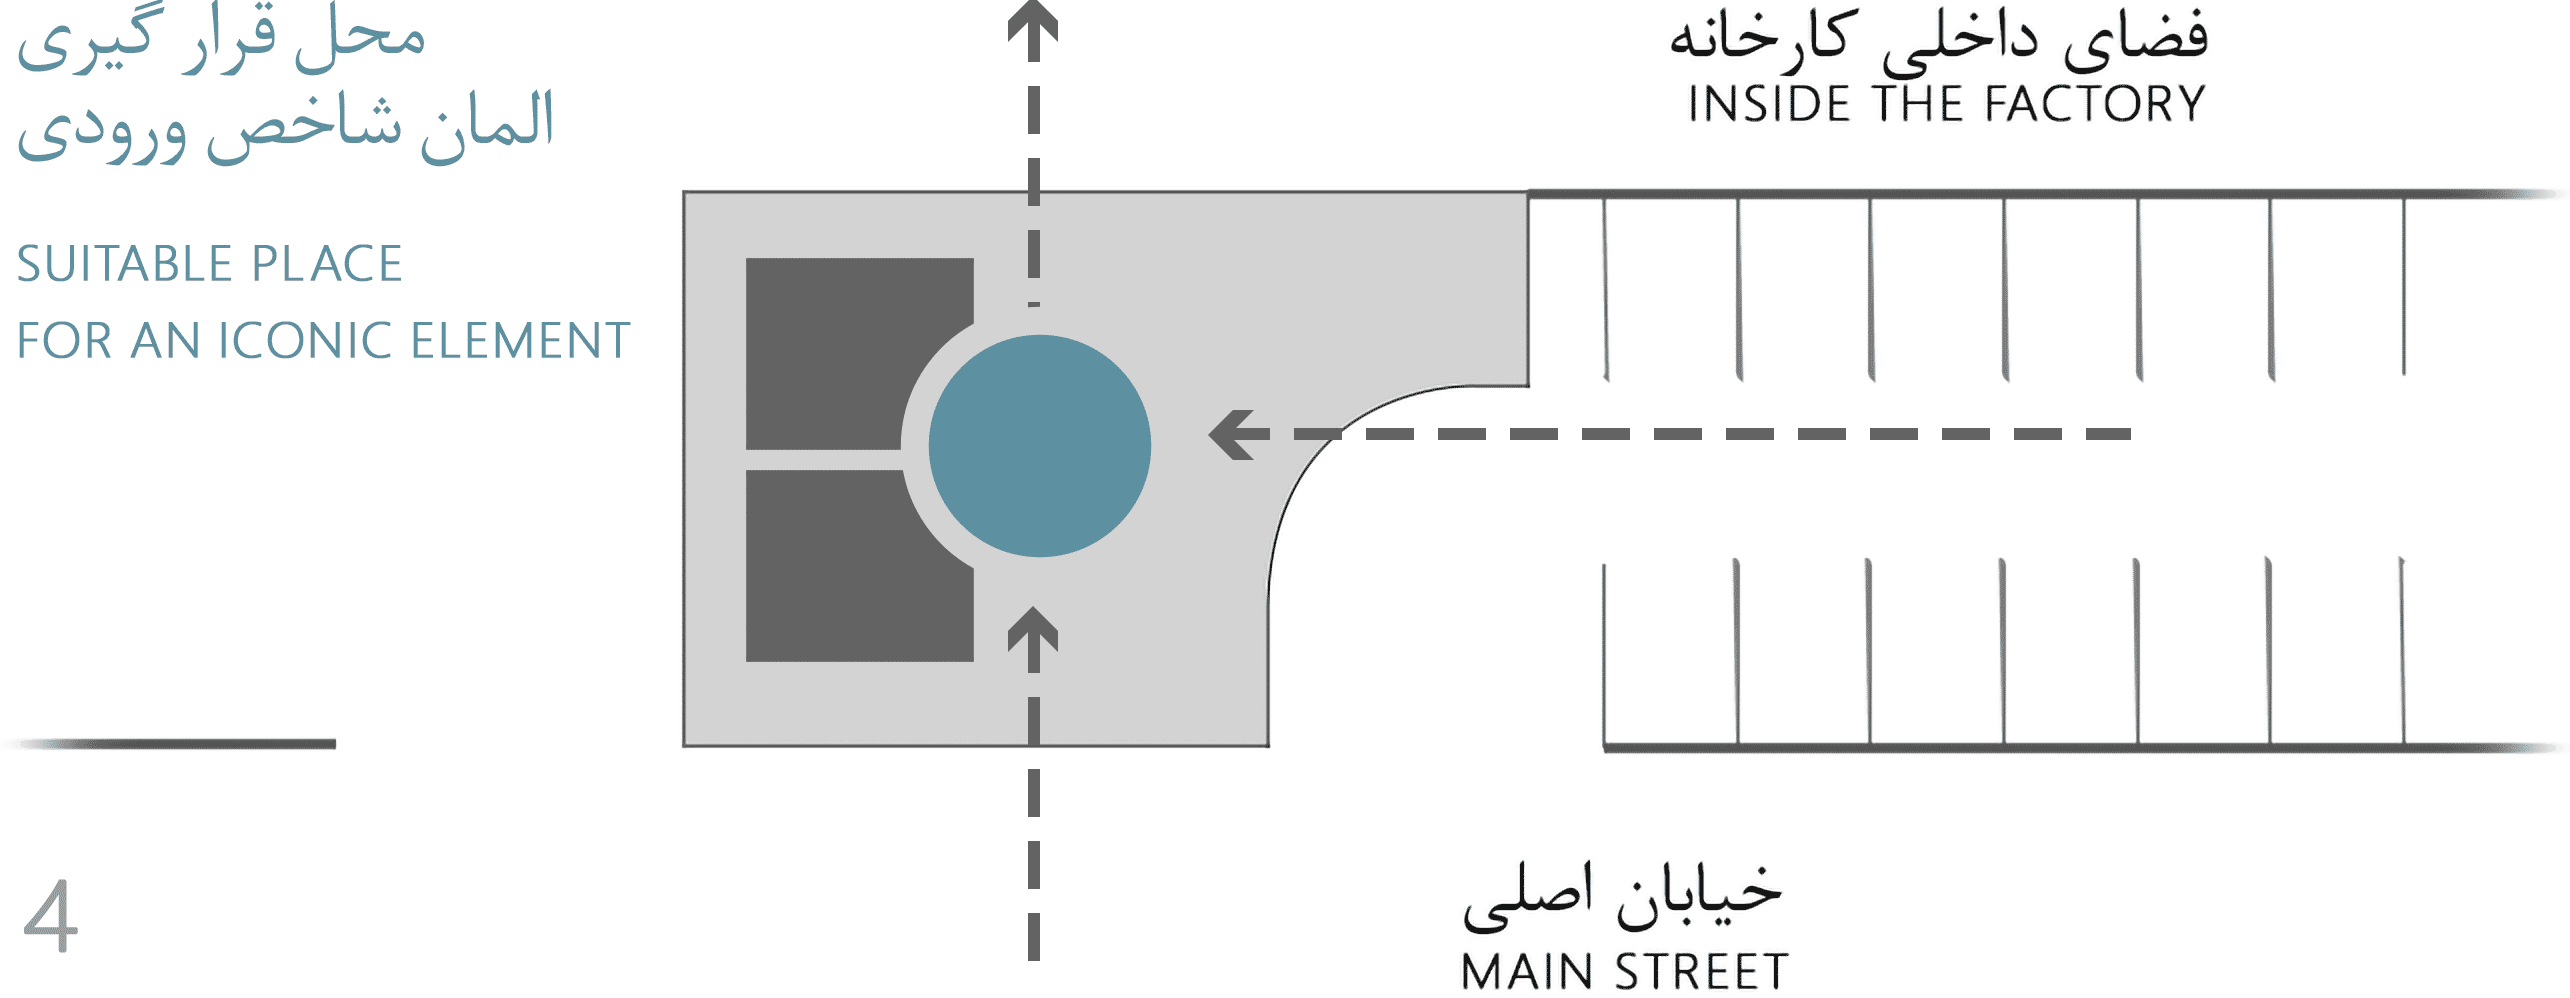 diagram 4, Sobhan Daroo co. entrance gate